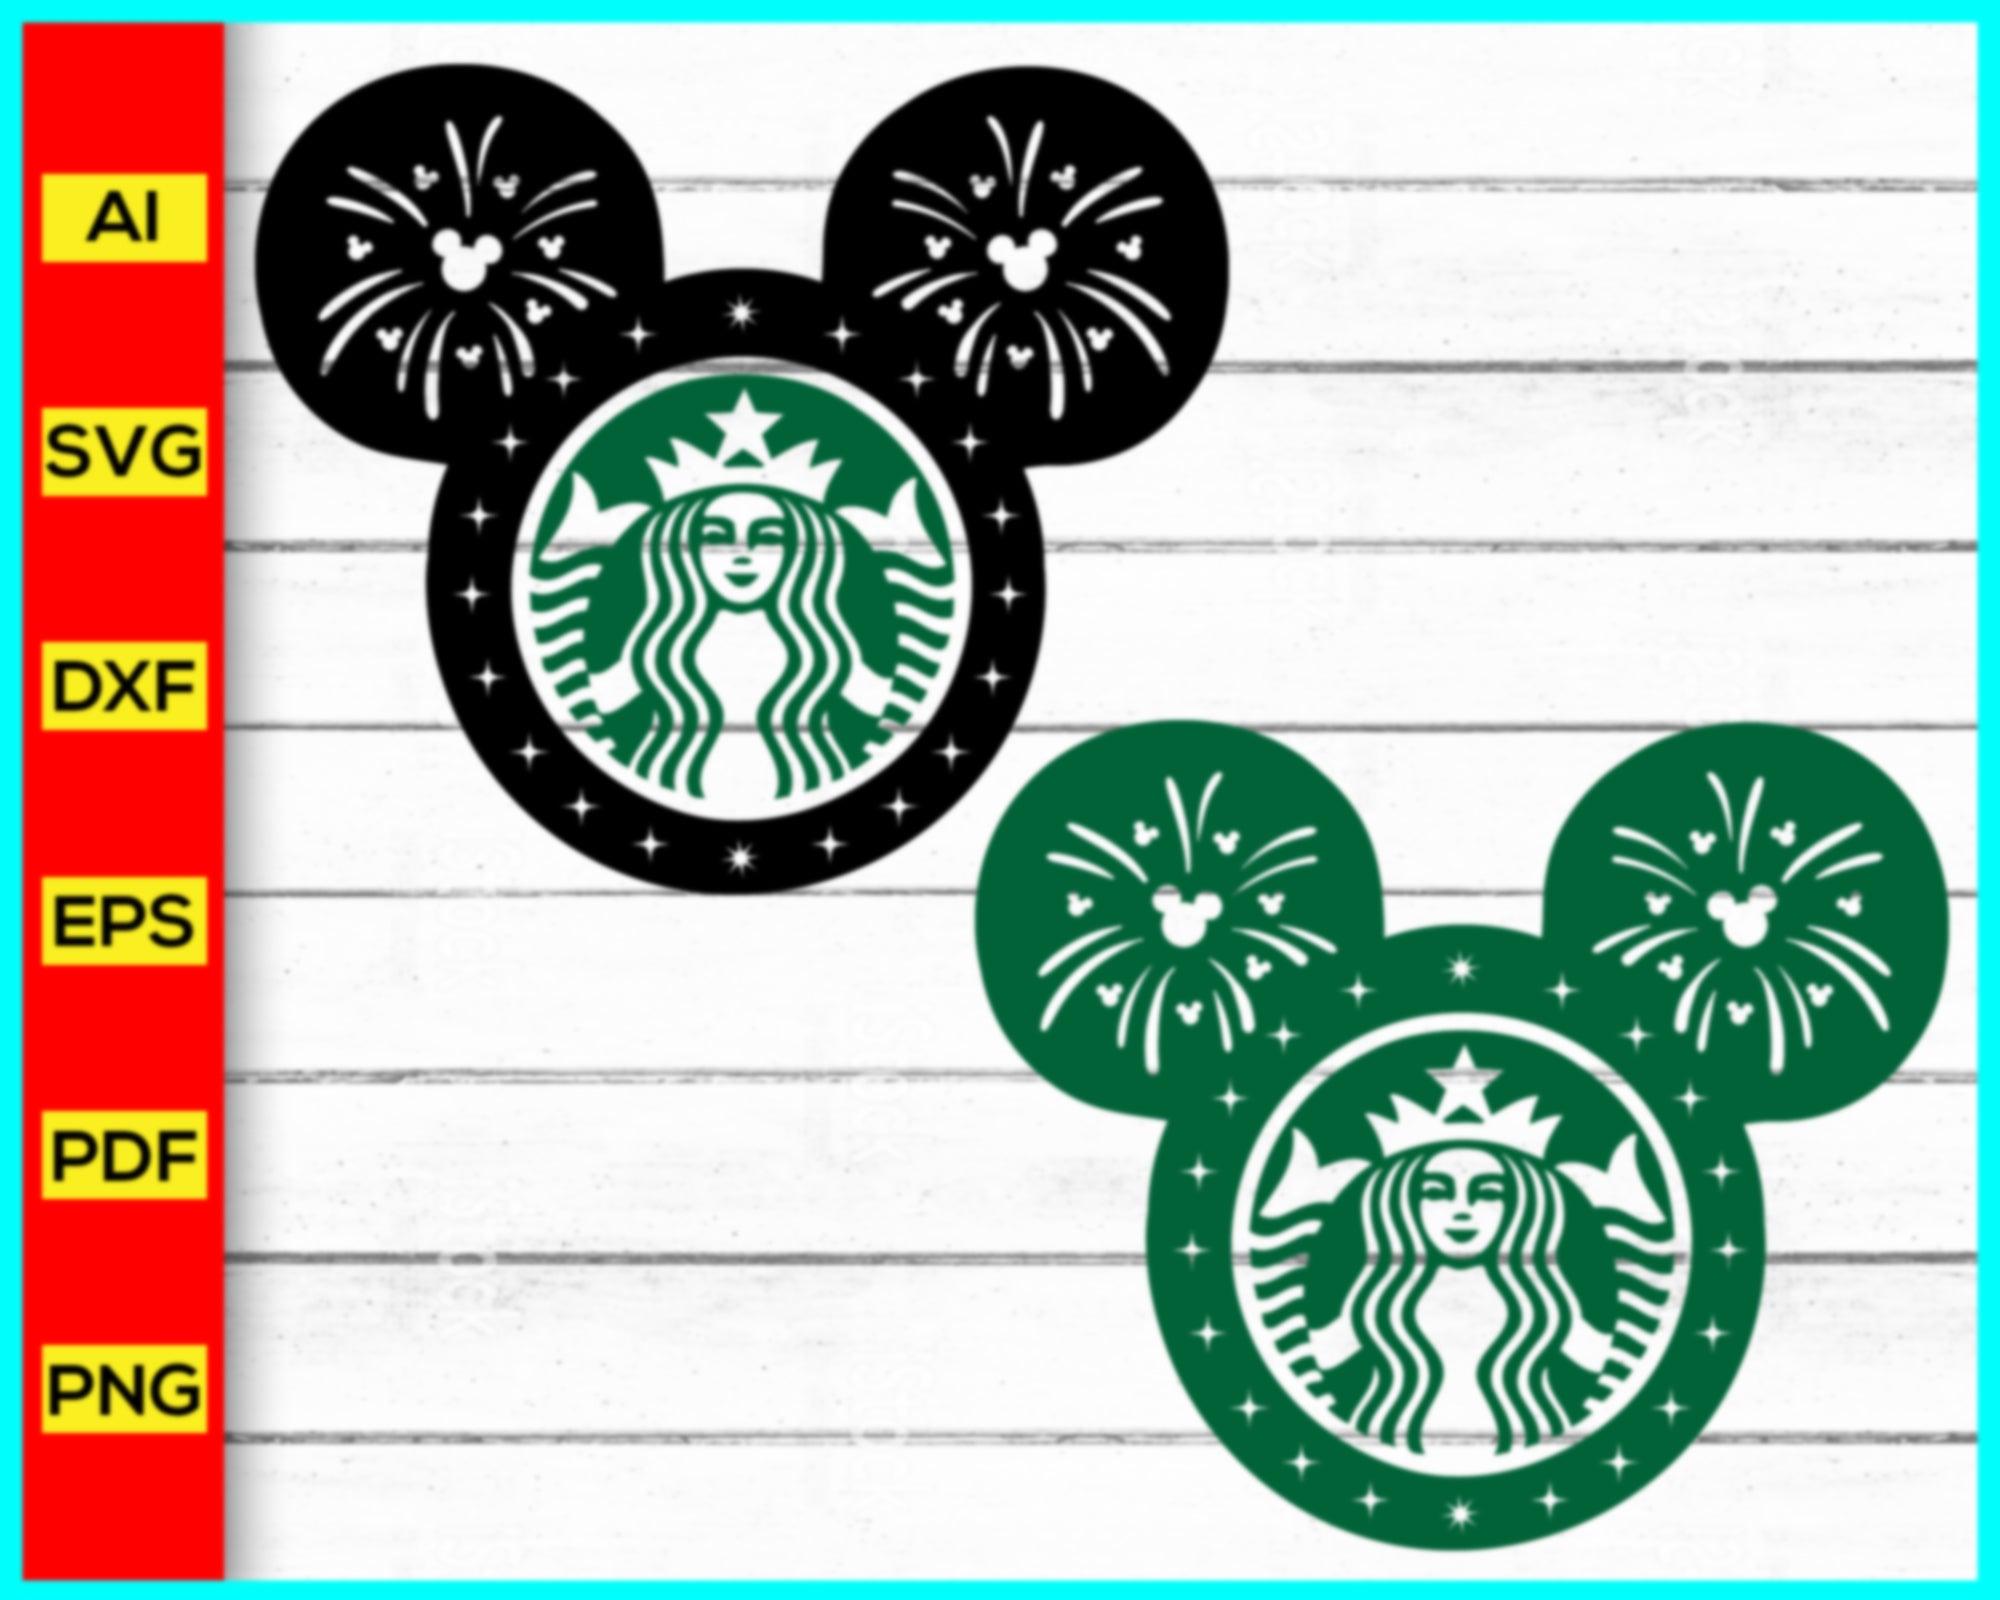 Minnie Louis Vuitton Png, Louis Vuitton Logo Png, Minnie Mouse Png, Disney  Fashion Brand Png, Ai Digital File